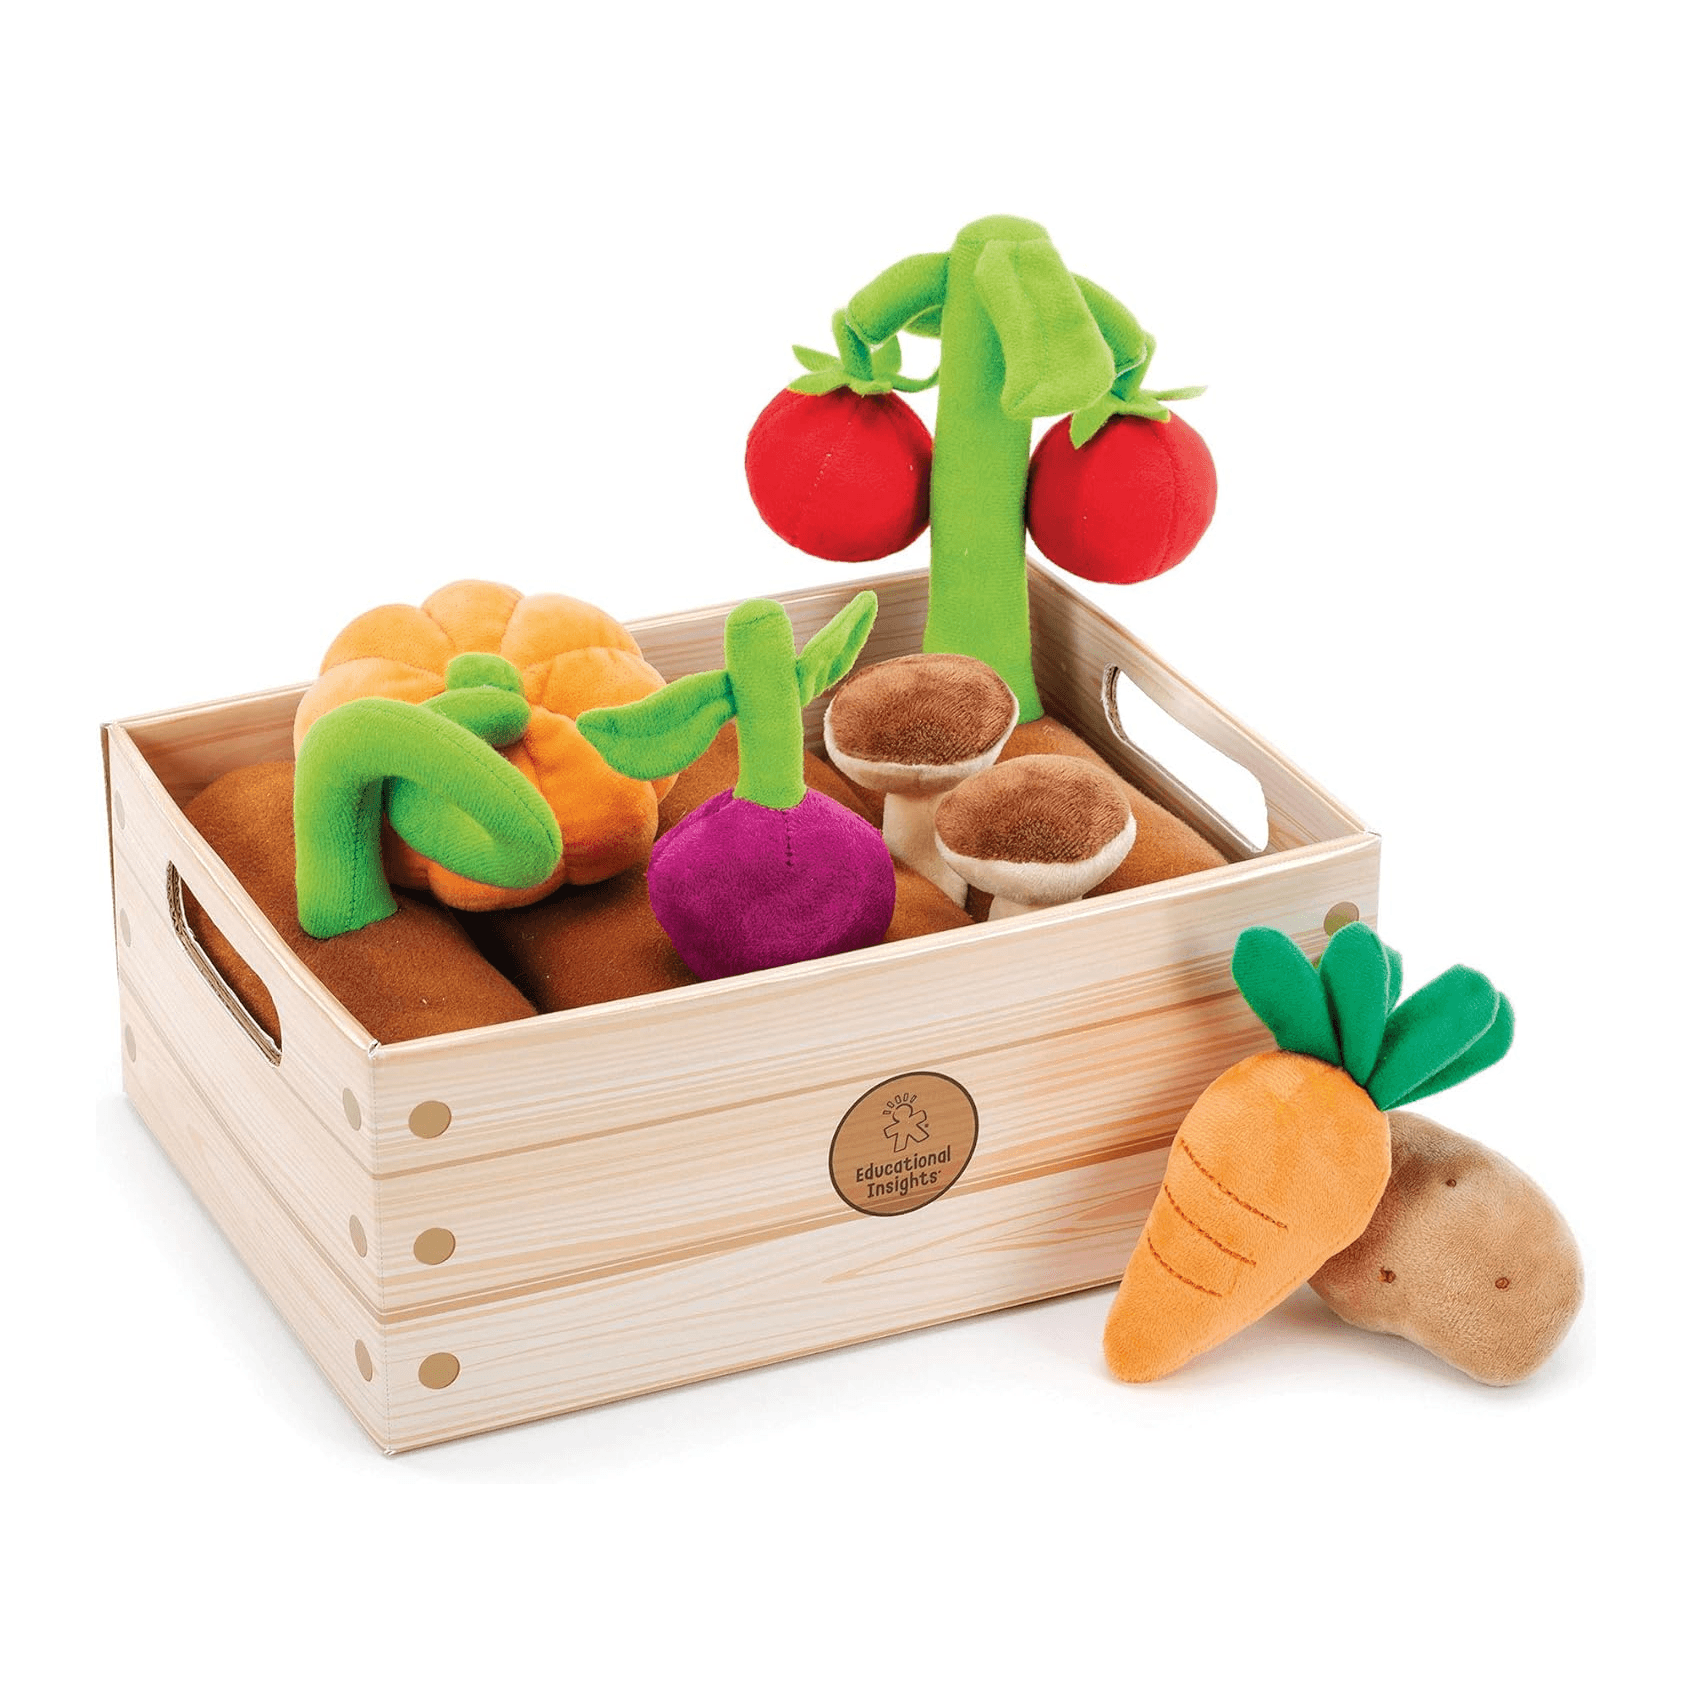 Montessori Educational Insights Plush Vegetable Garden 13-Piece Set